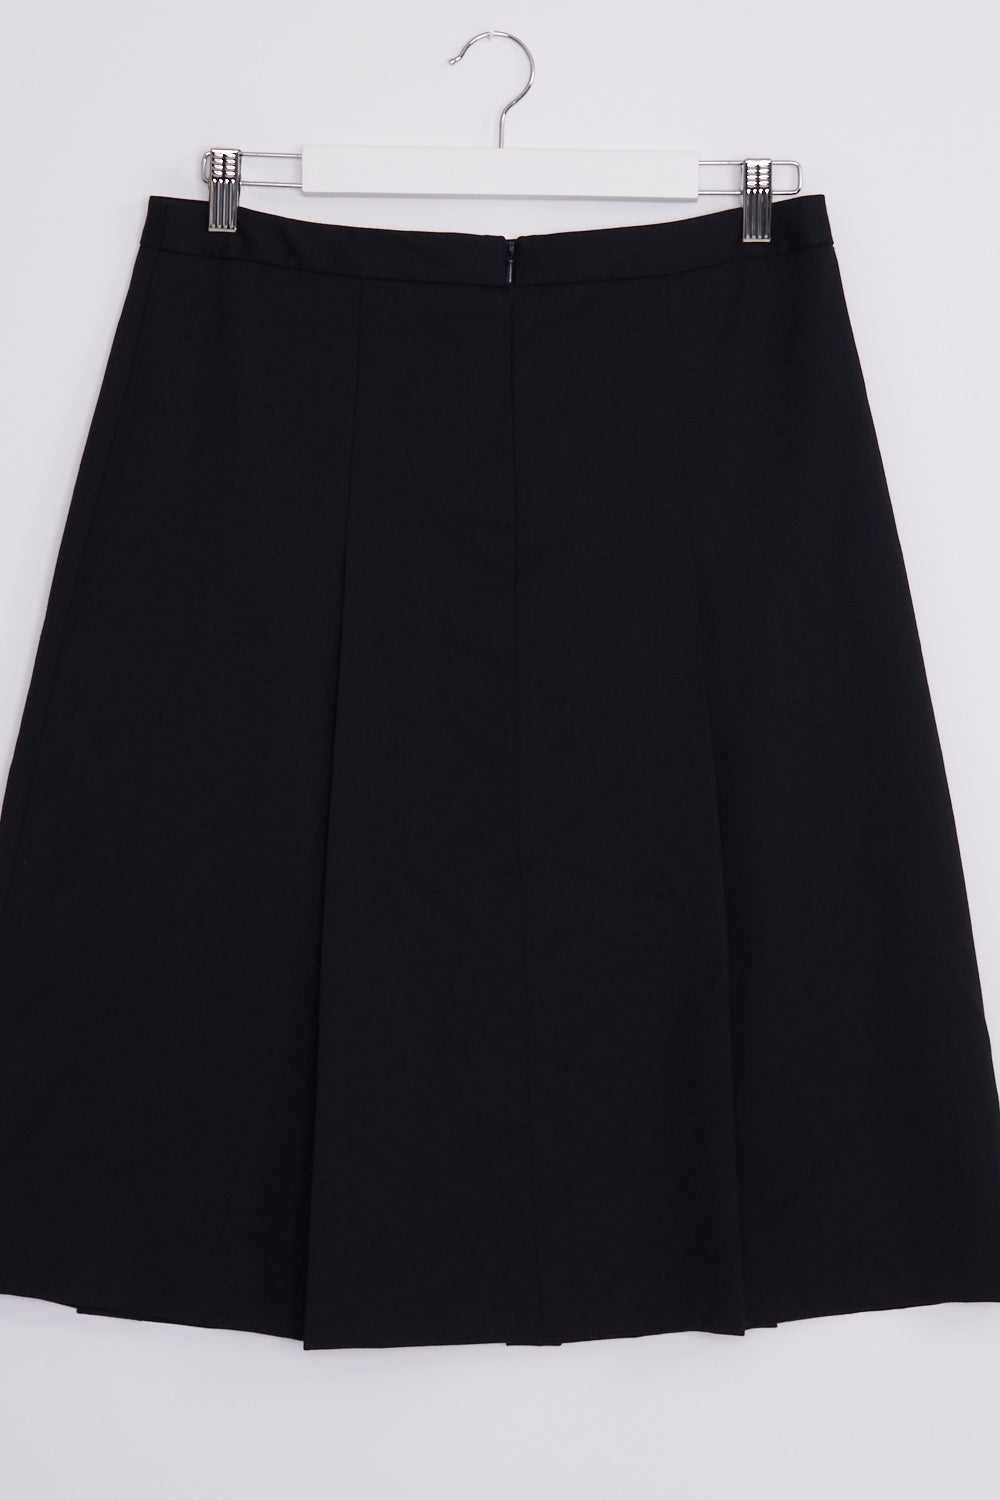 Sportscraft Black Wool Blend Pleated Skirt 10